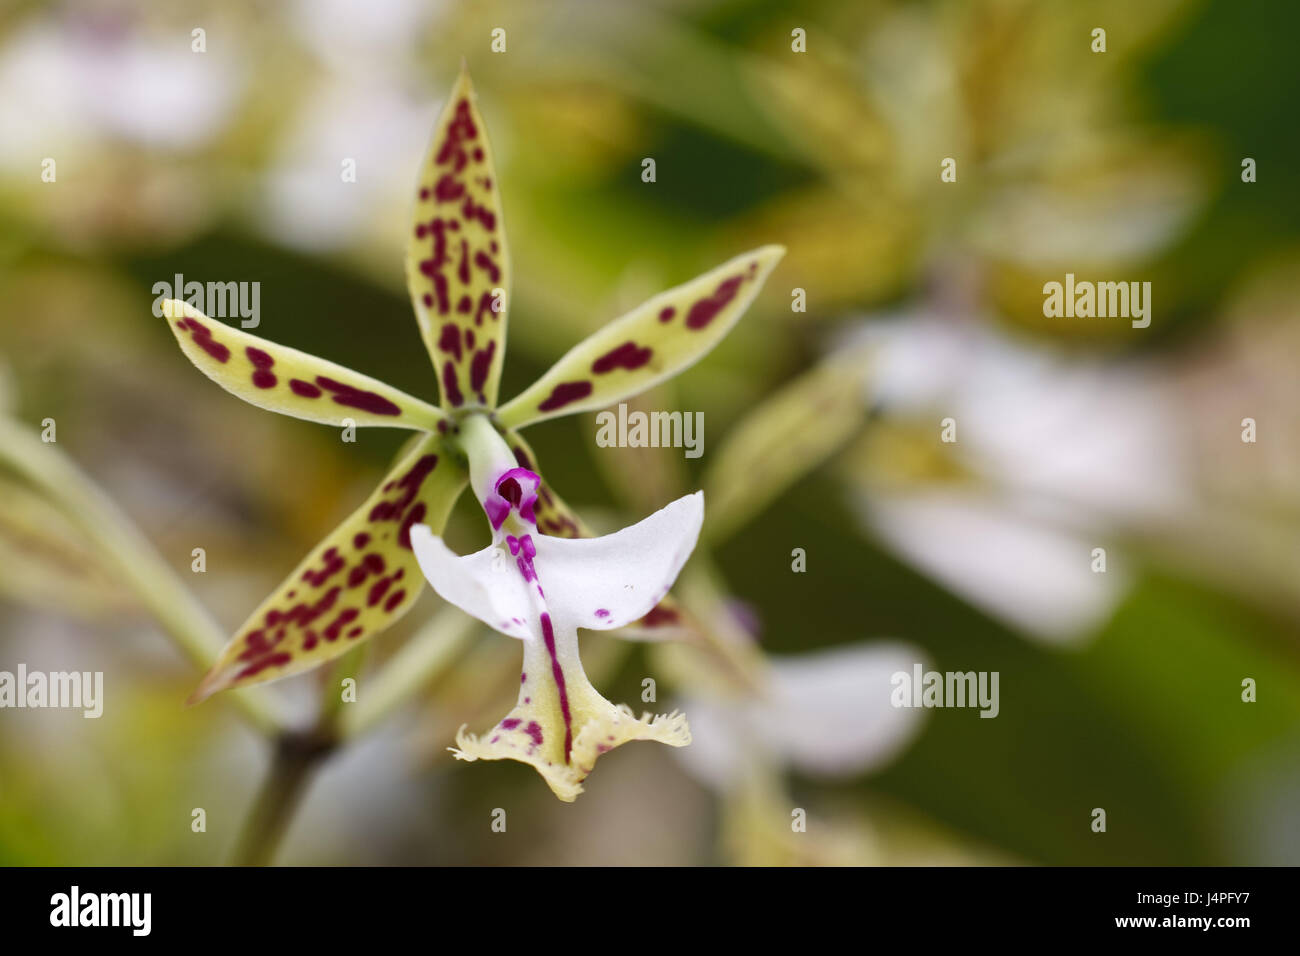 Honduras, orchid, detail, blossom, Stock Photo